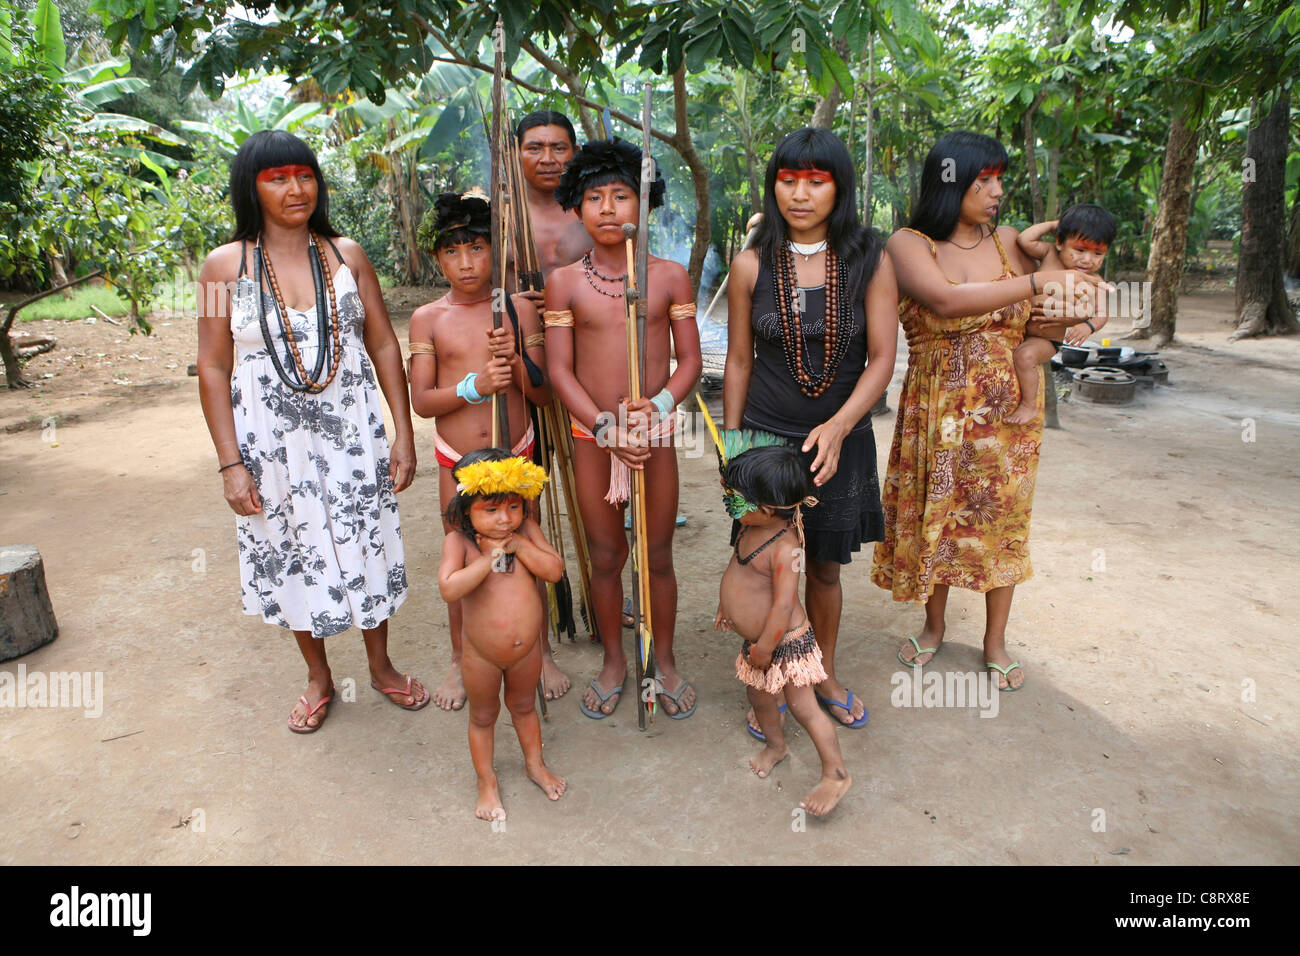 Brazilian Family Nudist